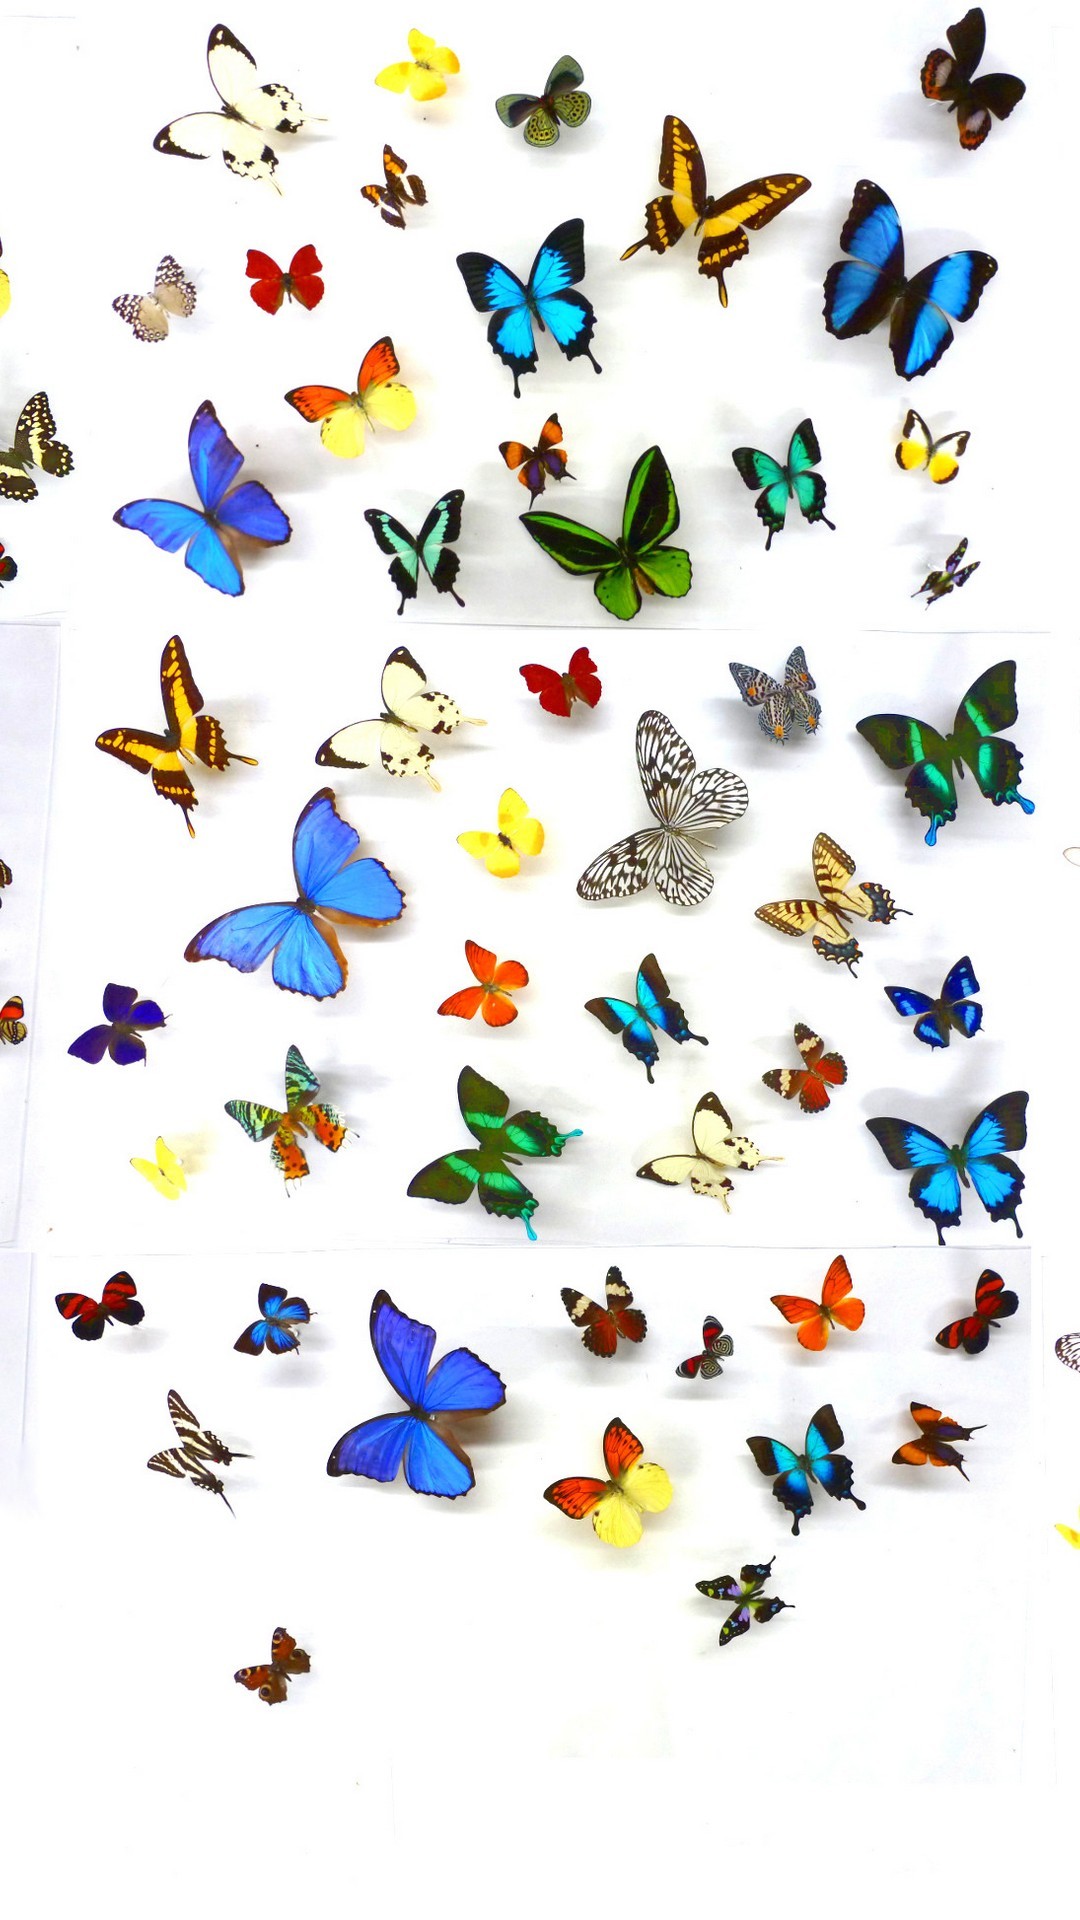 Wallpaper iPhone Butterfly Design resolution 1080x1920